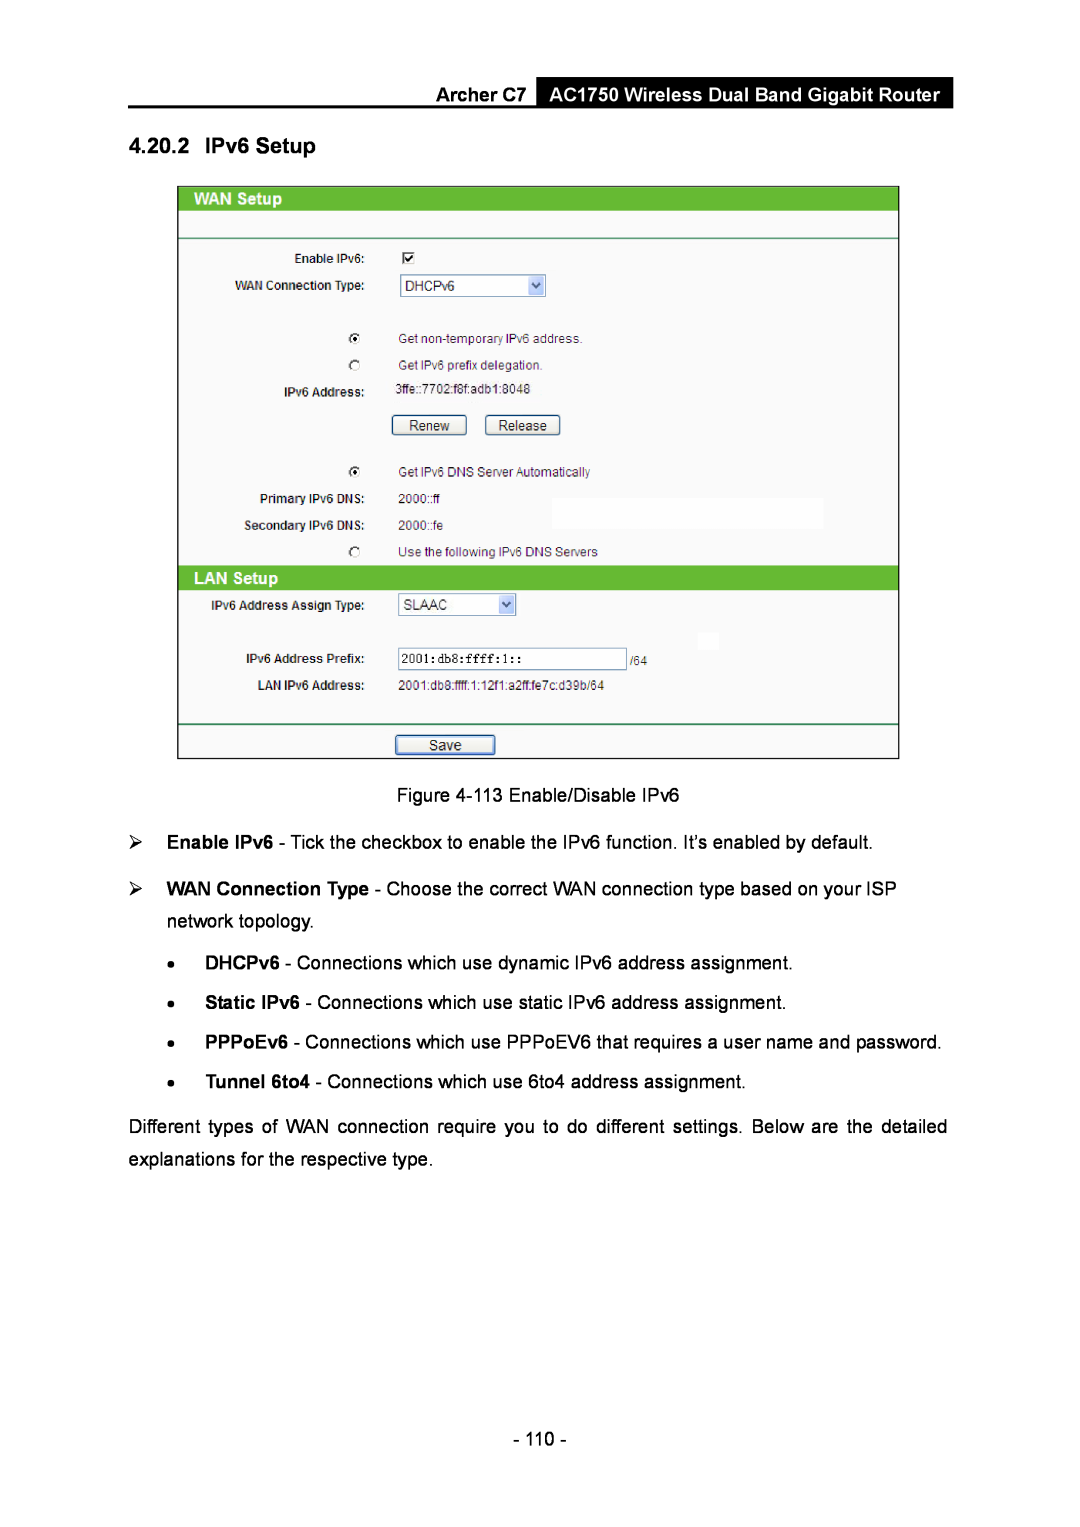 TP-Link manual 4.20.2 IPv6 Setup, Archer C7 AC1750 Wireless Dual Band Gigabit Router 